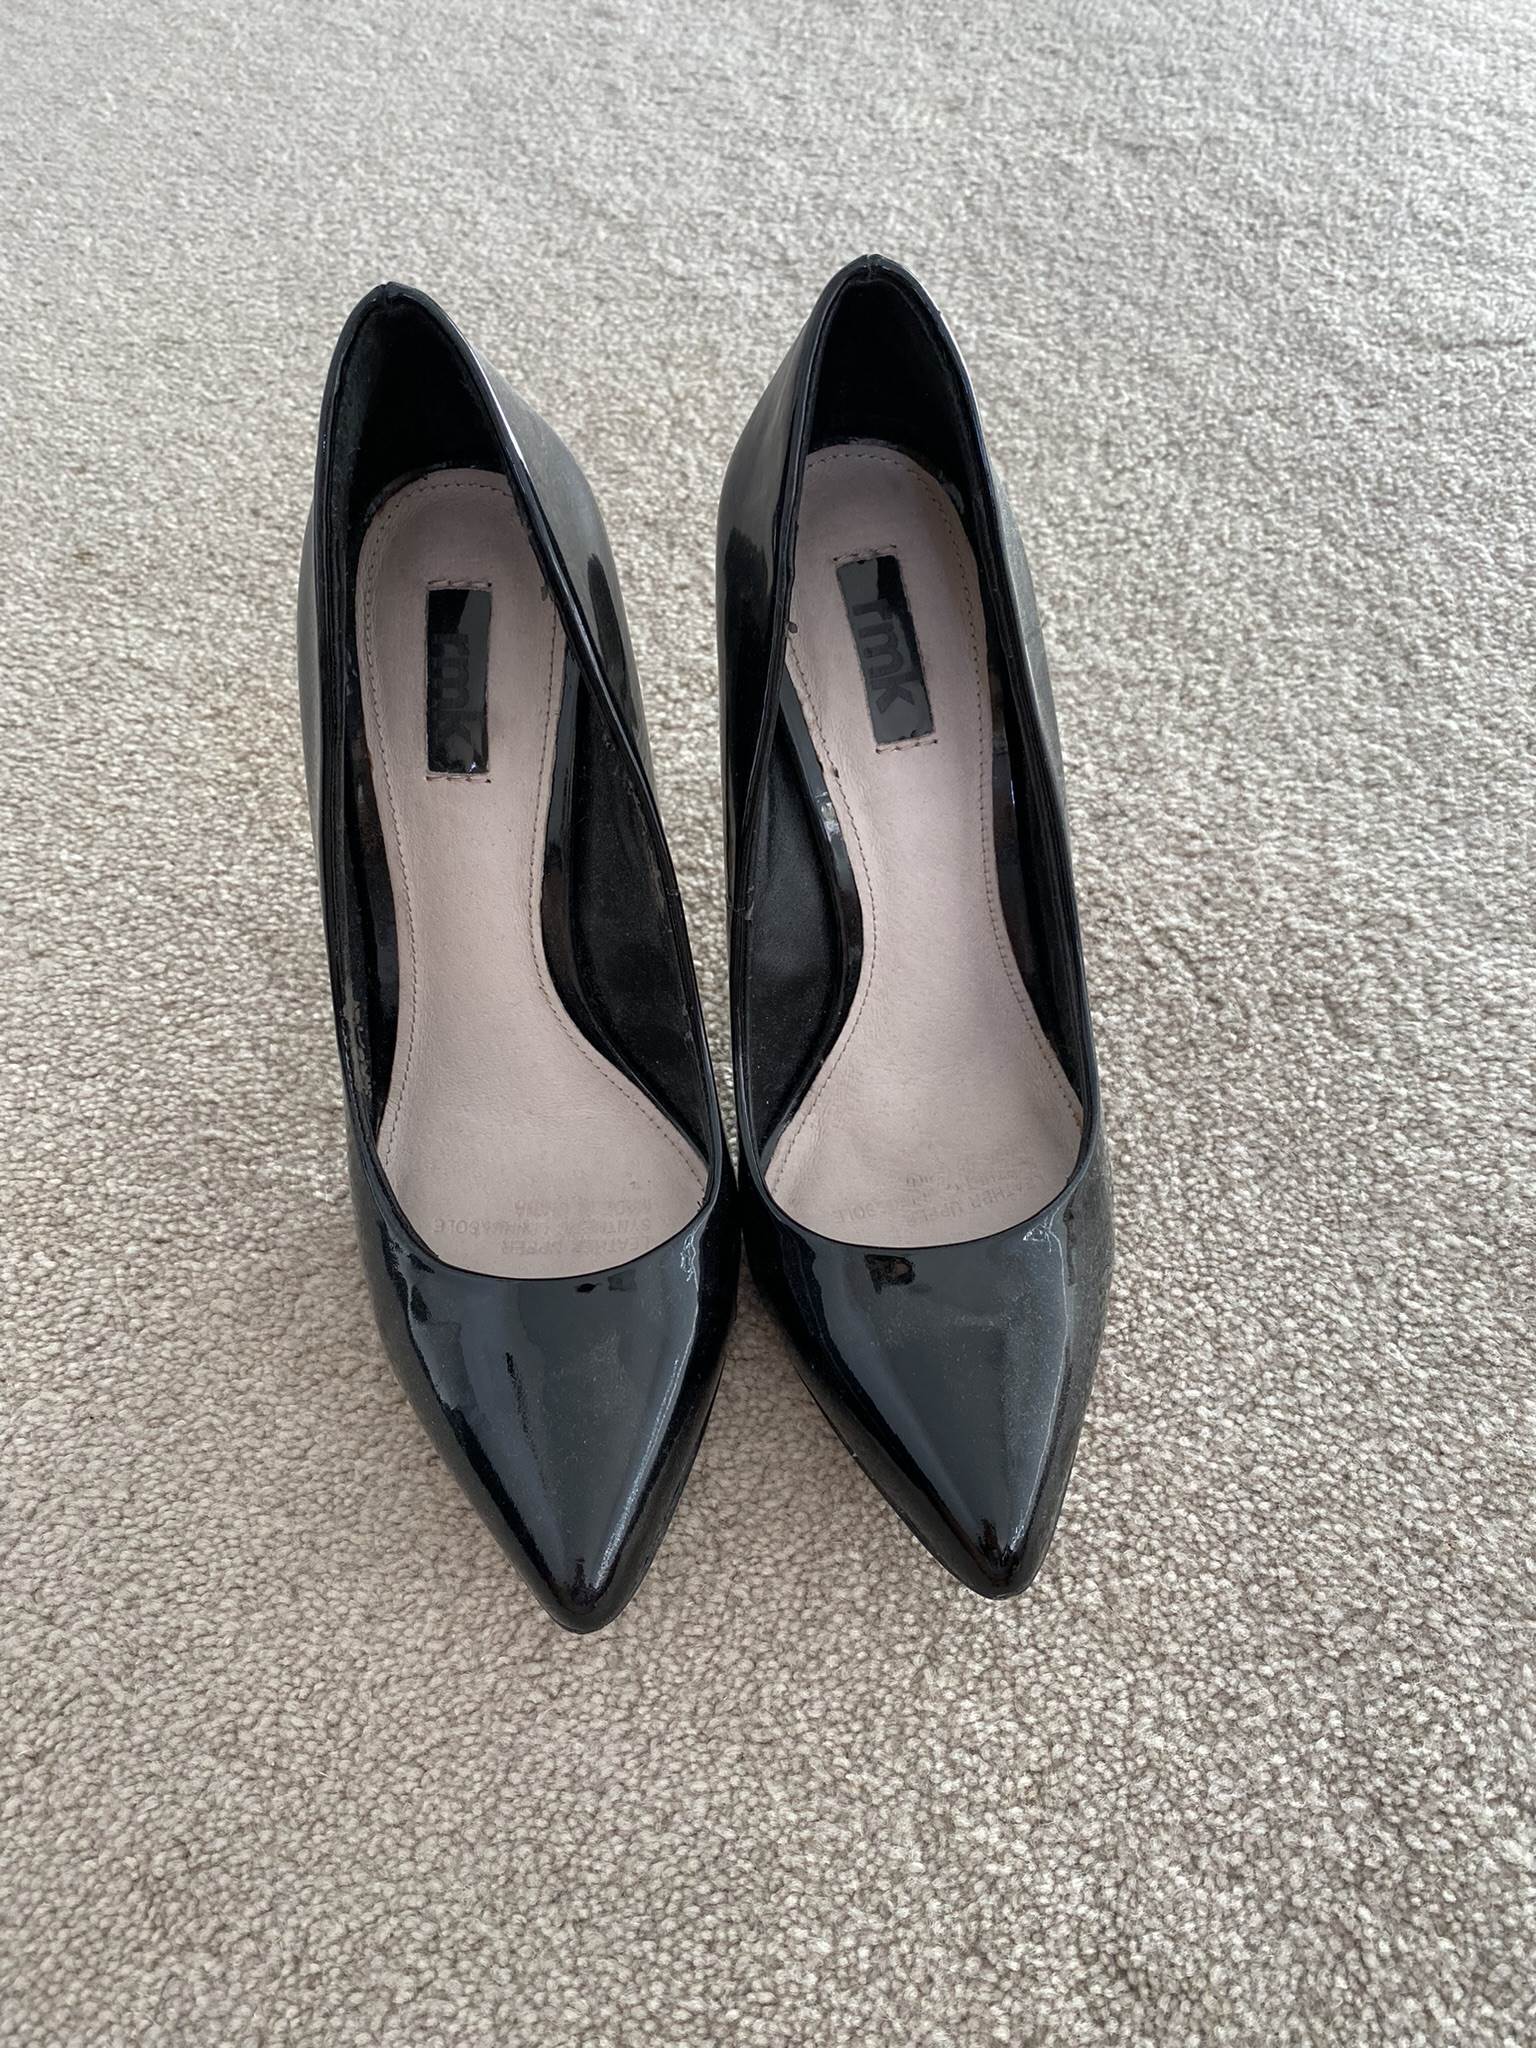 RMK pointy heels